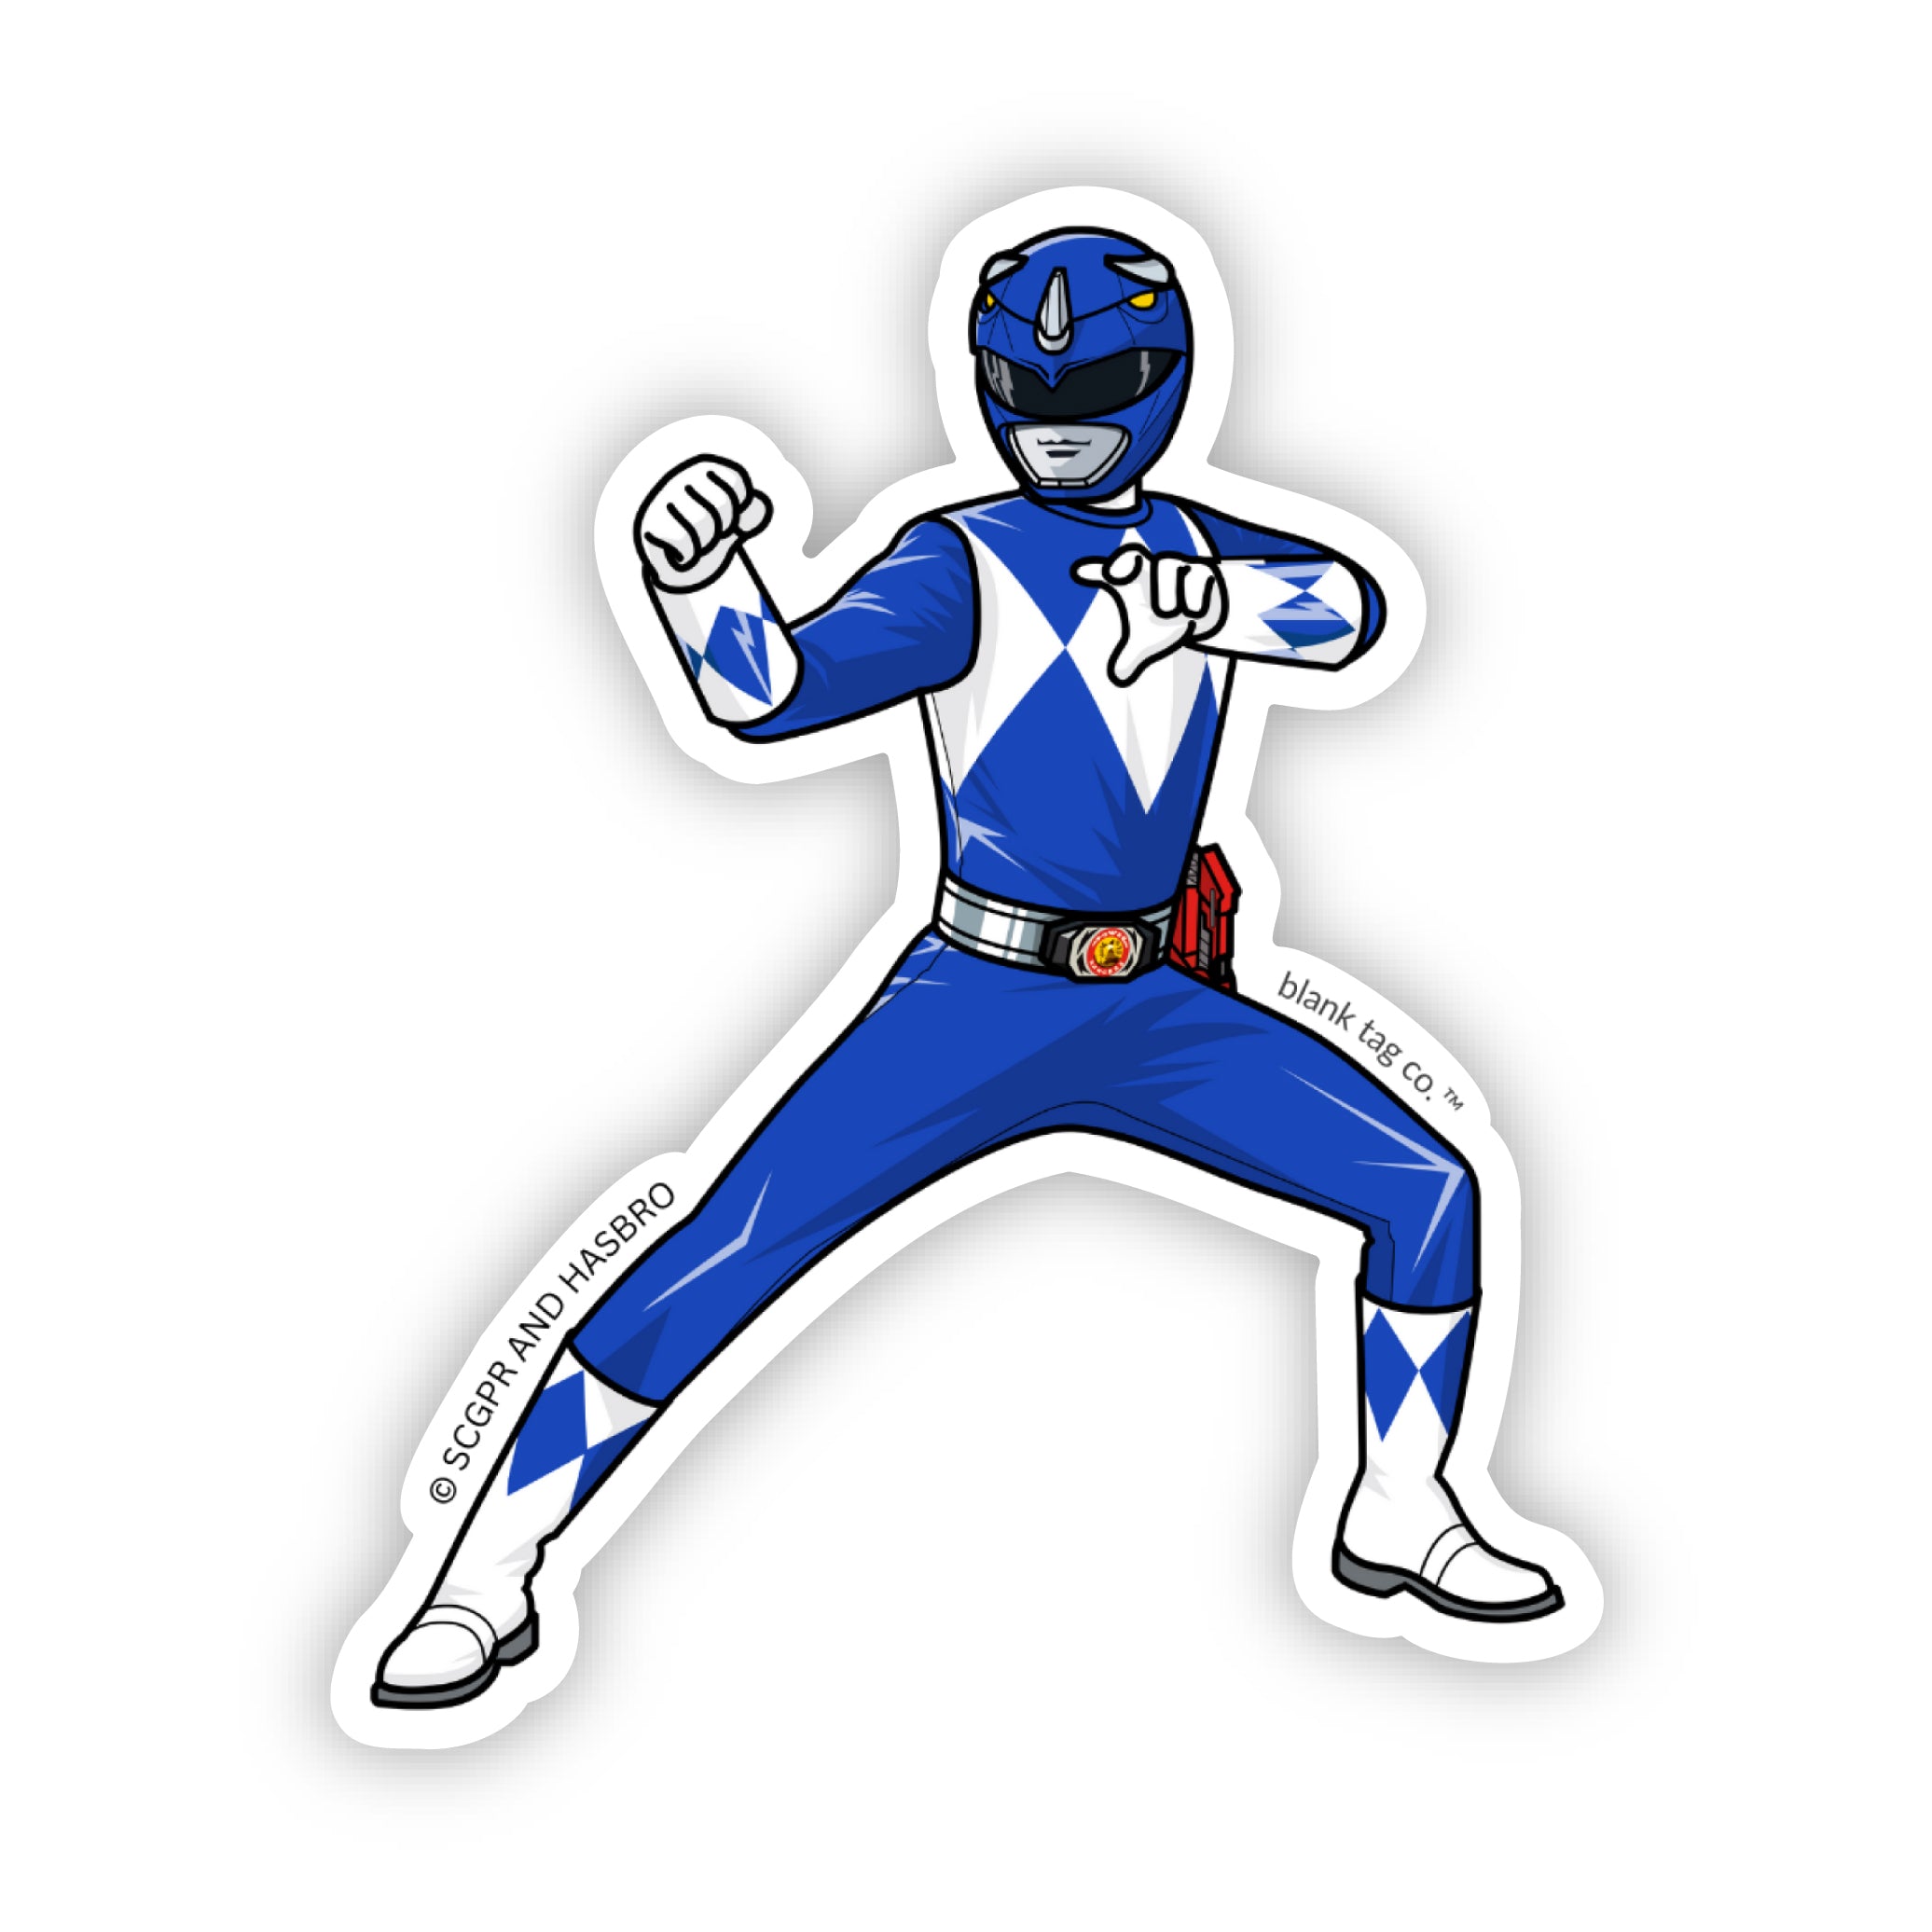 The Blue Ranger Sticker